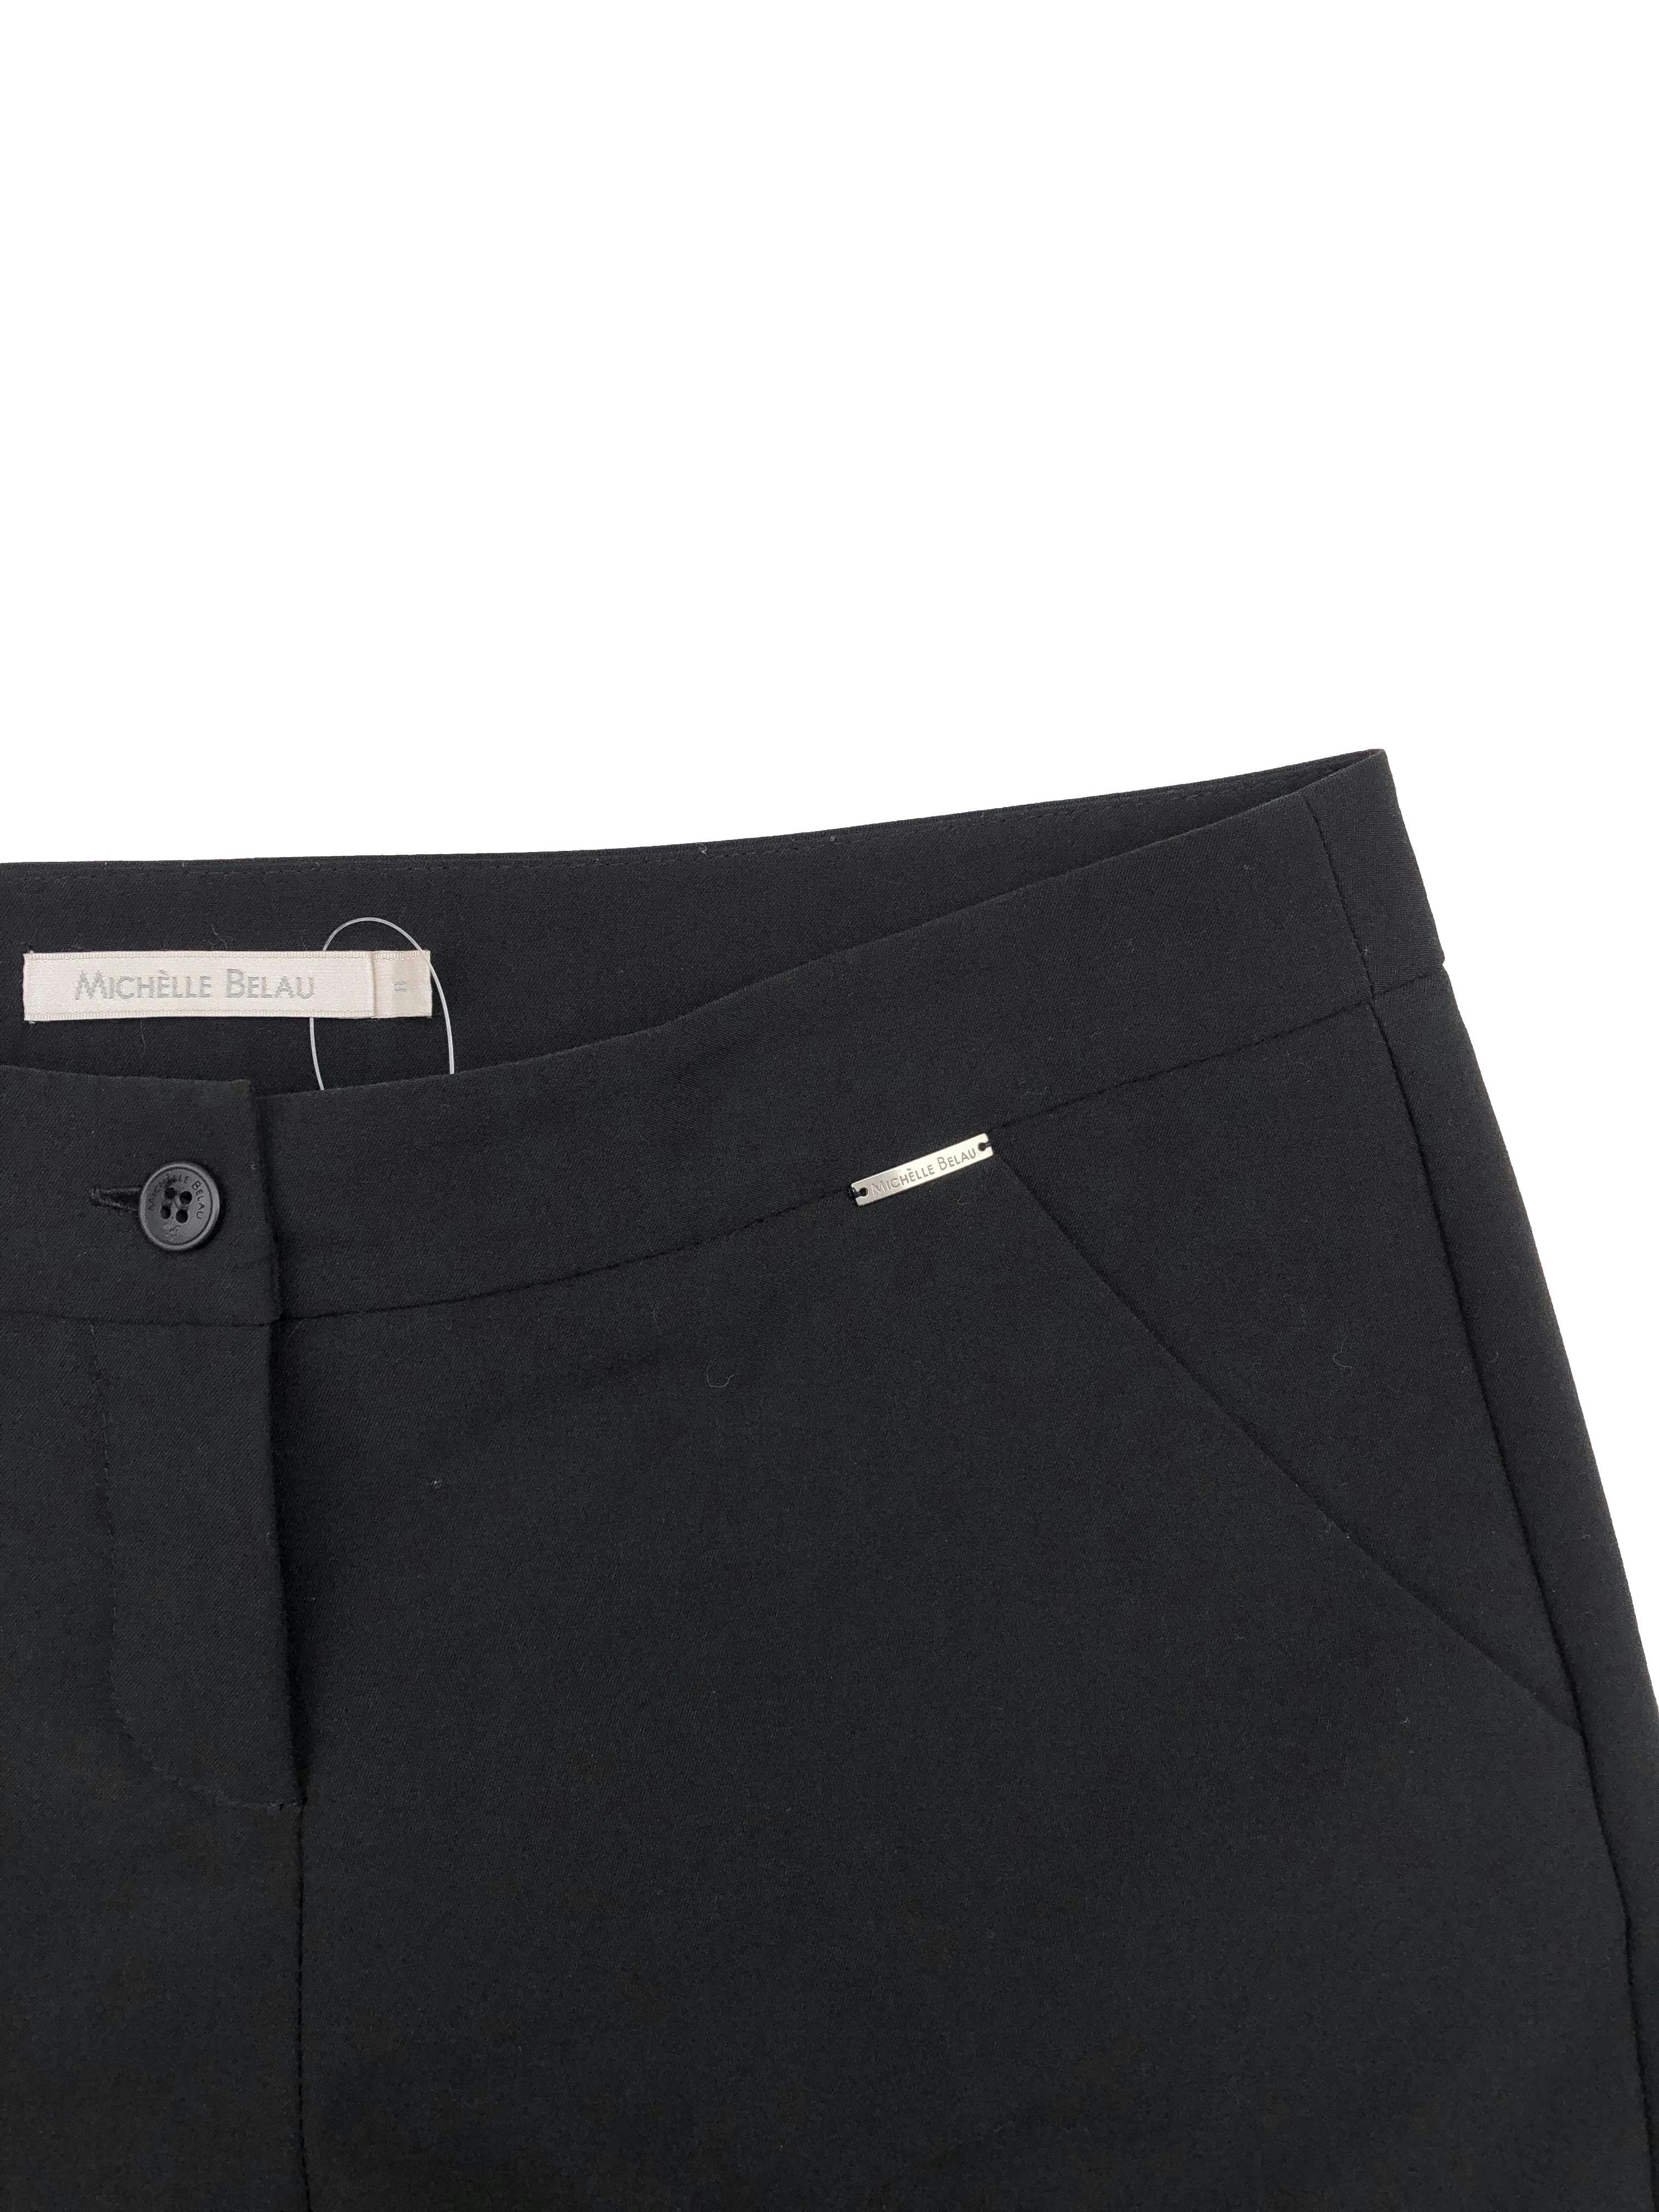 Pantalón negro Michèlle Belau, corte recto con bolsillos laterales y pinzas posteriores. Tiro 23cm, Cintura 84cm, Largo 97cm.